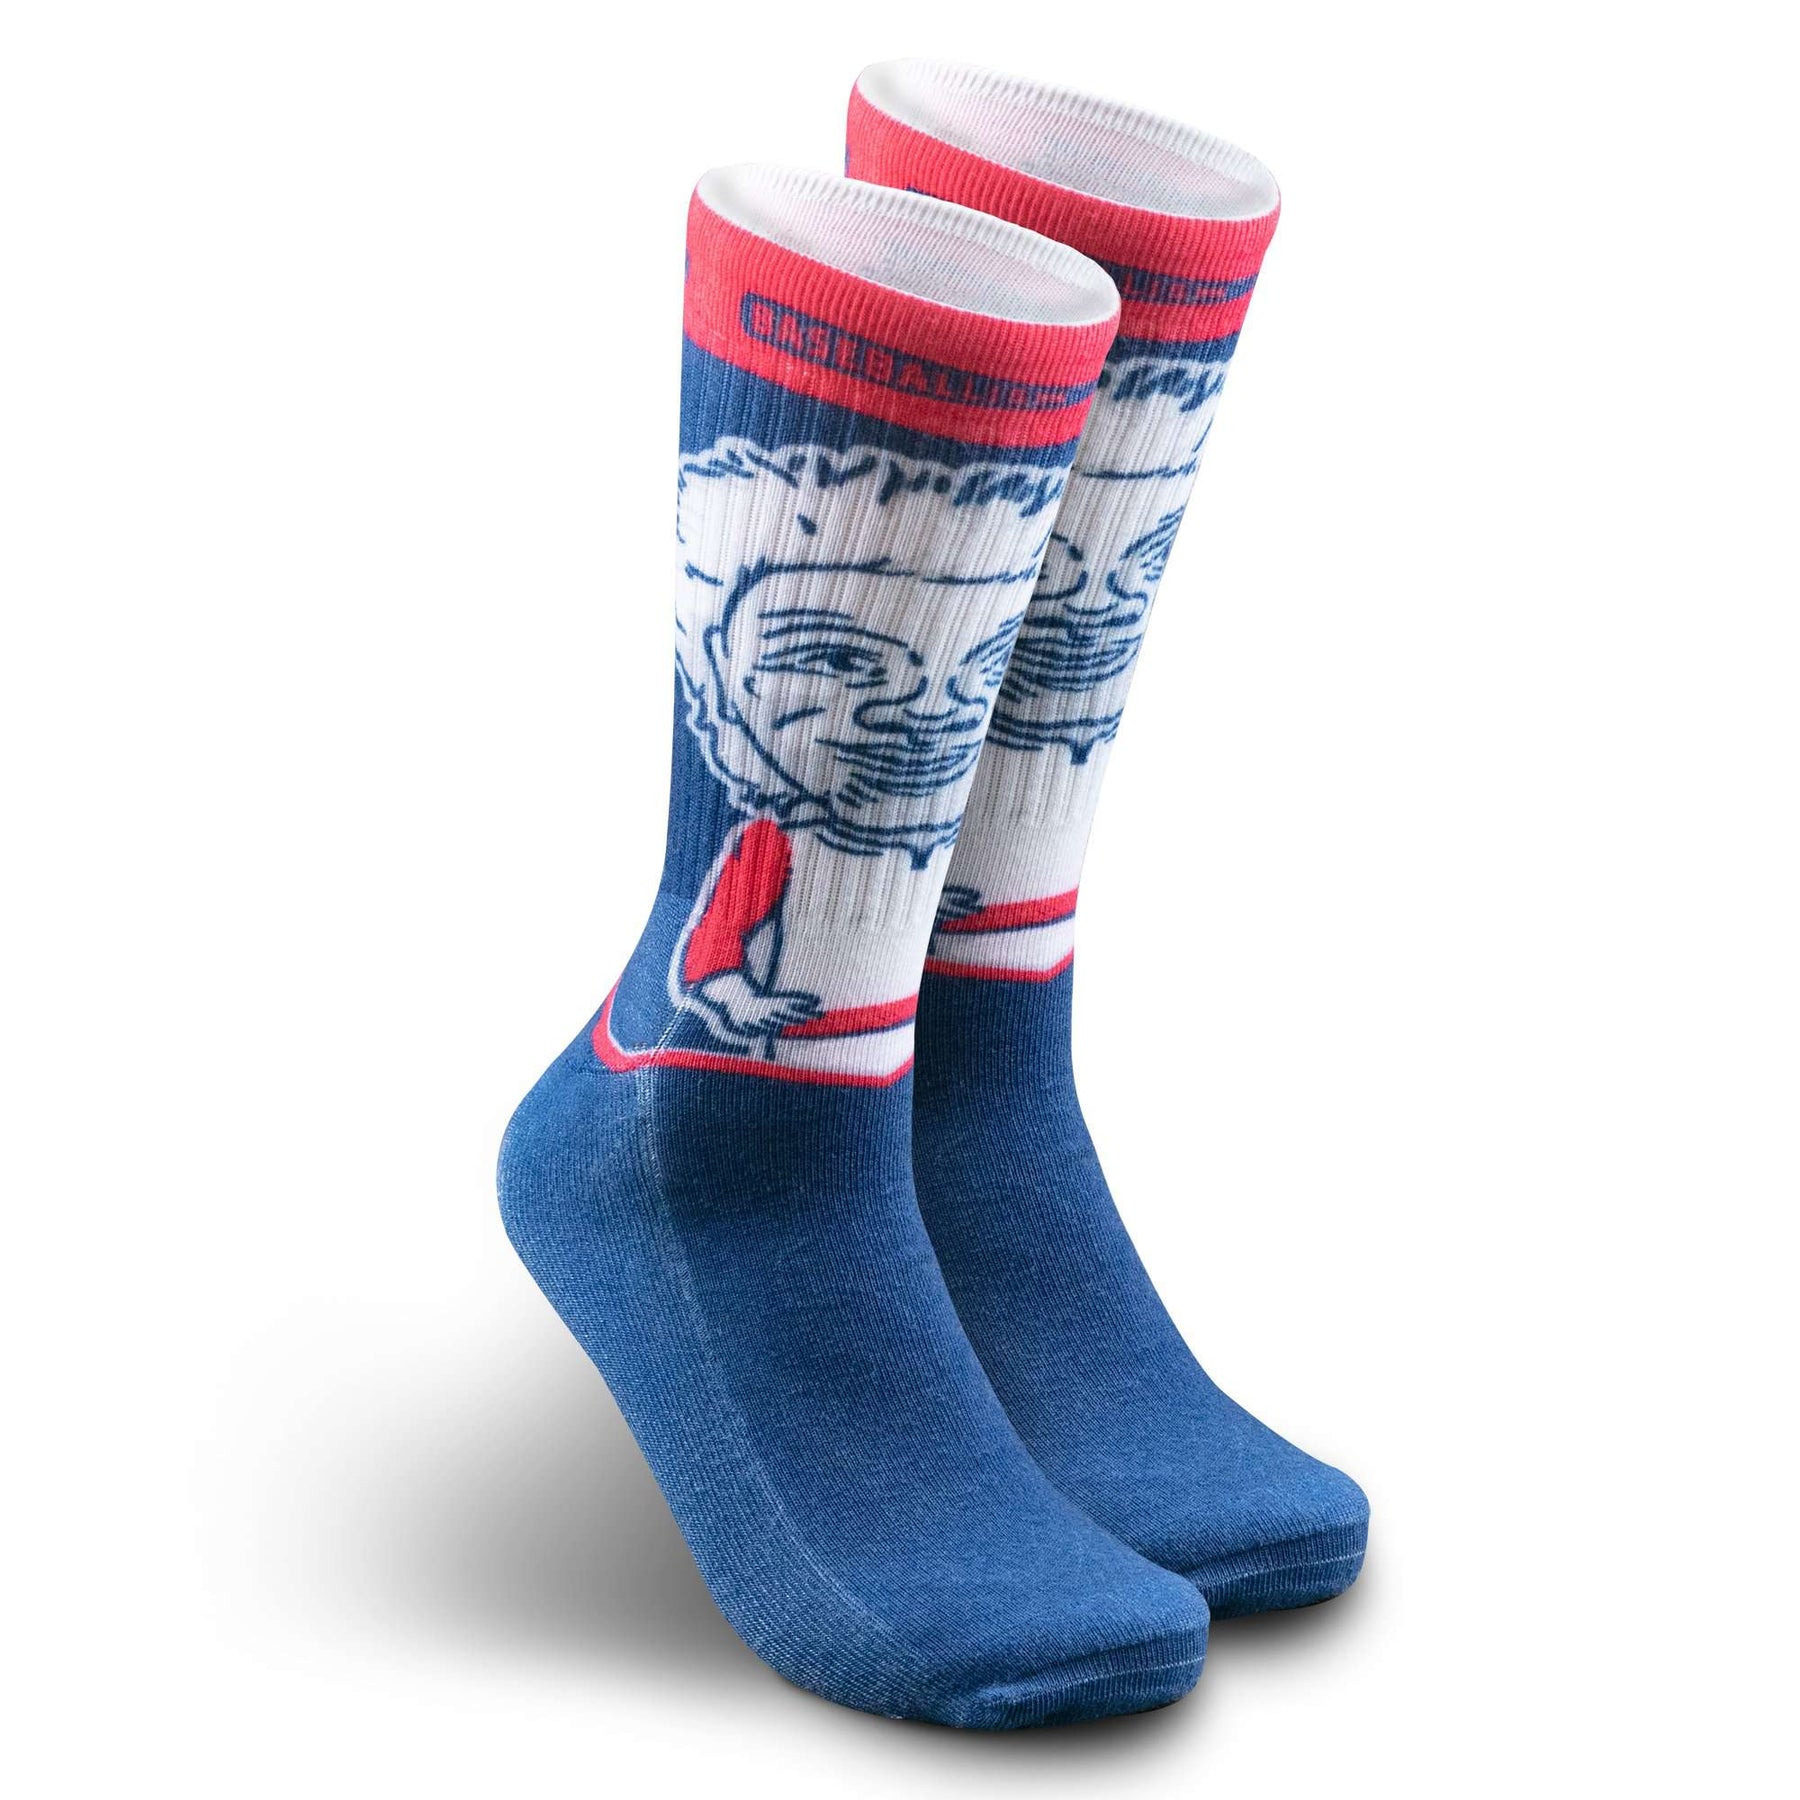 Jobu Socks - High Calf | Baseballism x Major League Collection ...